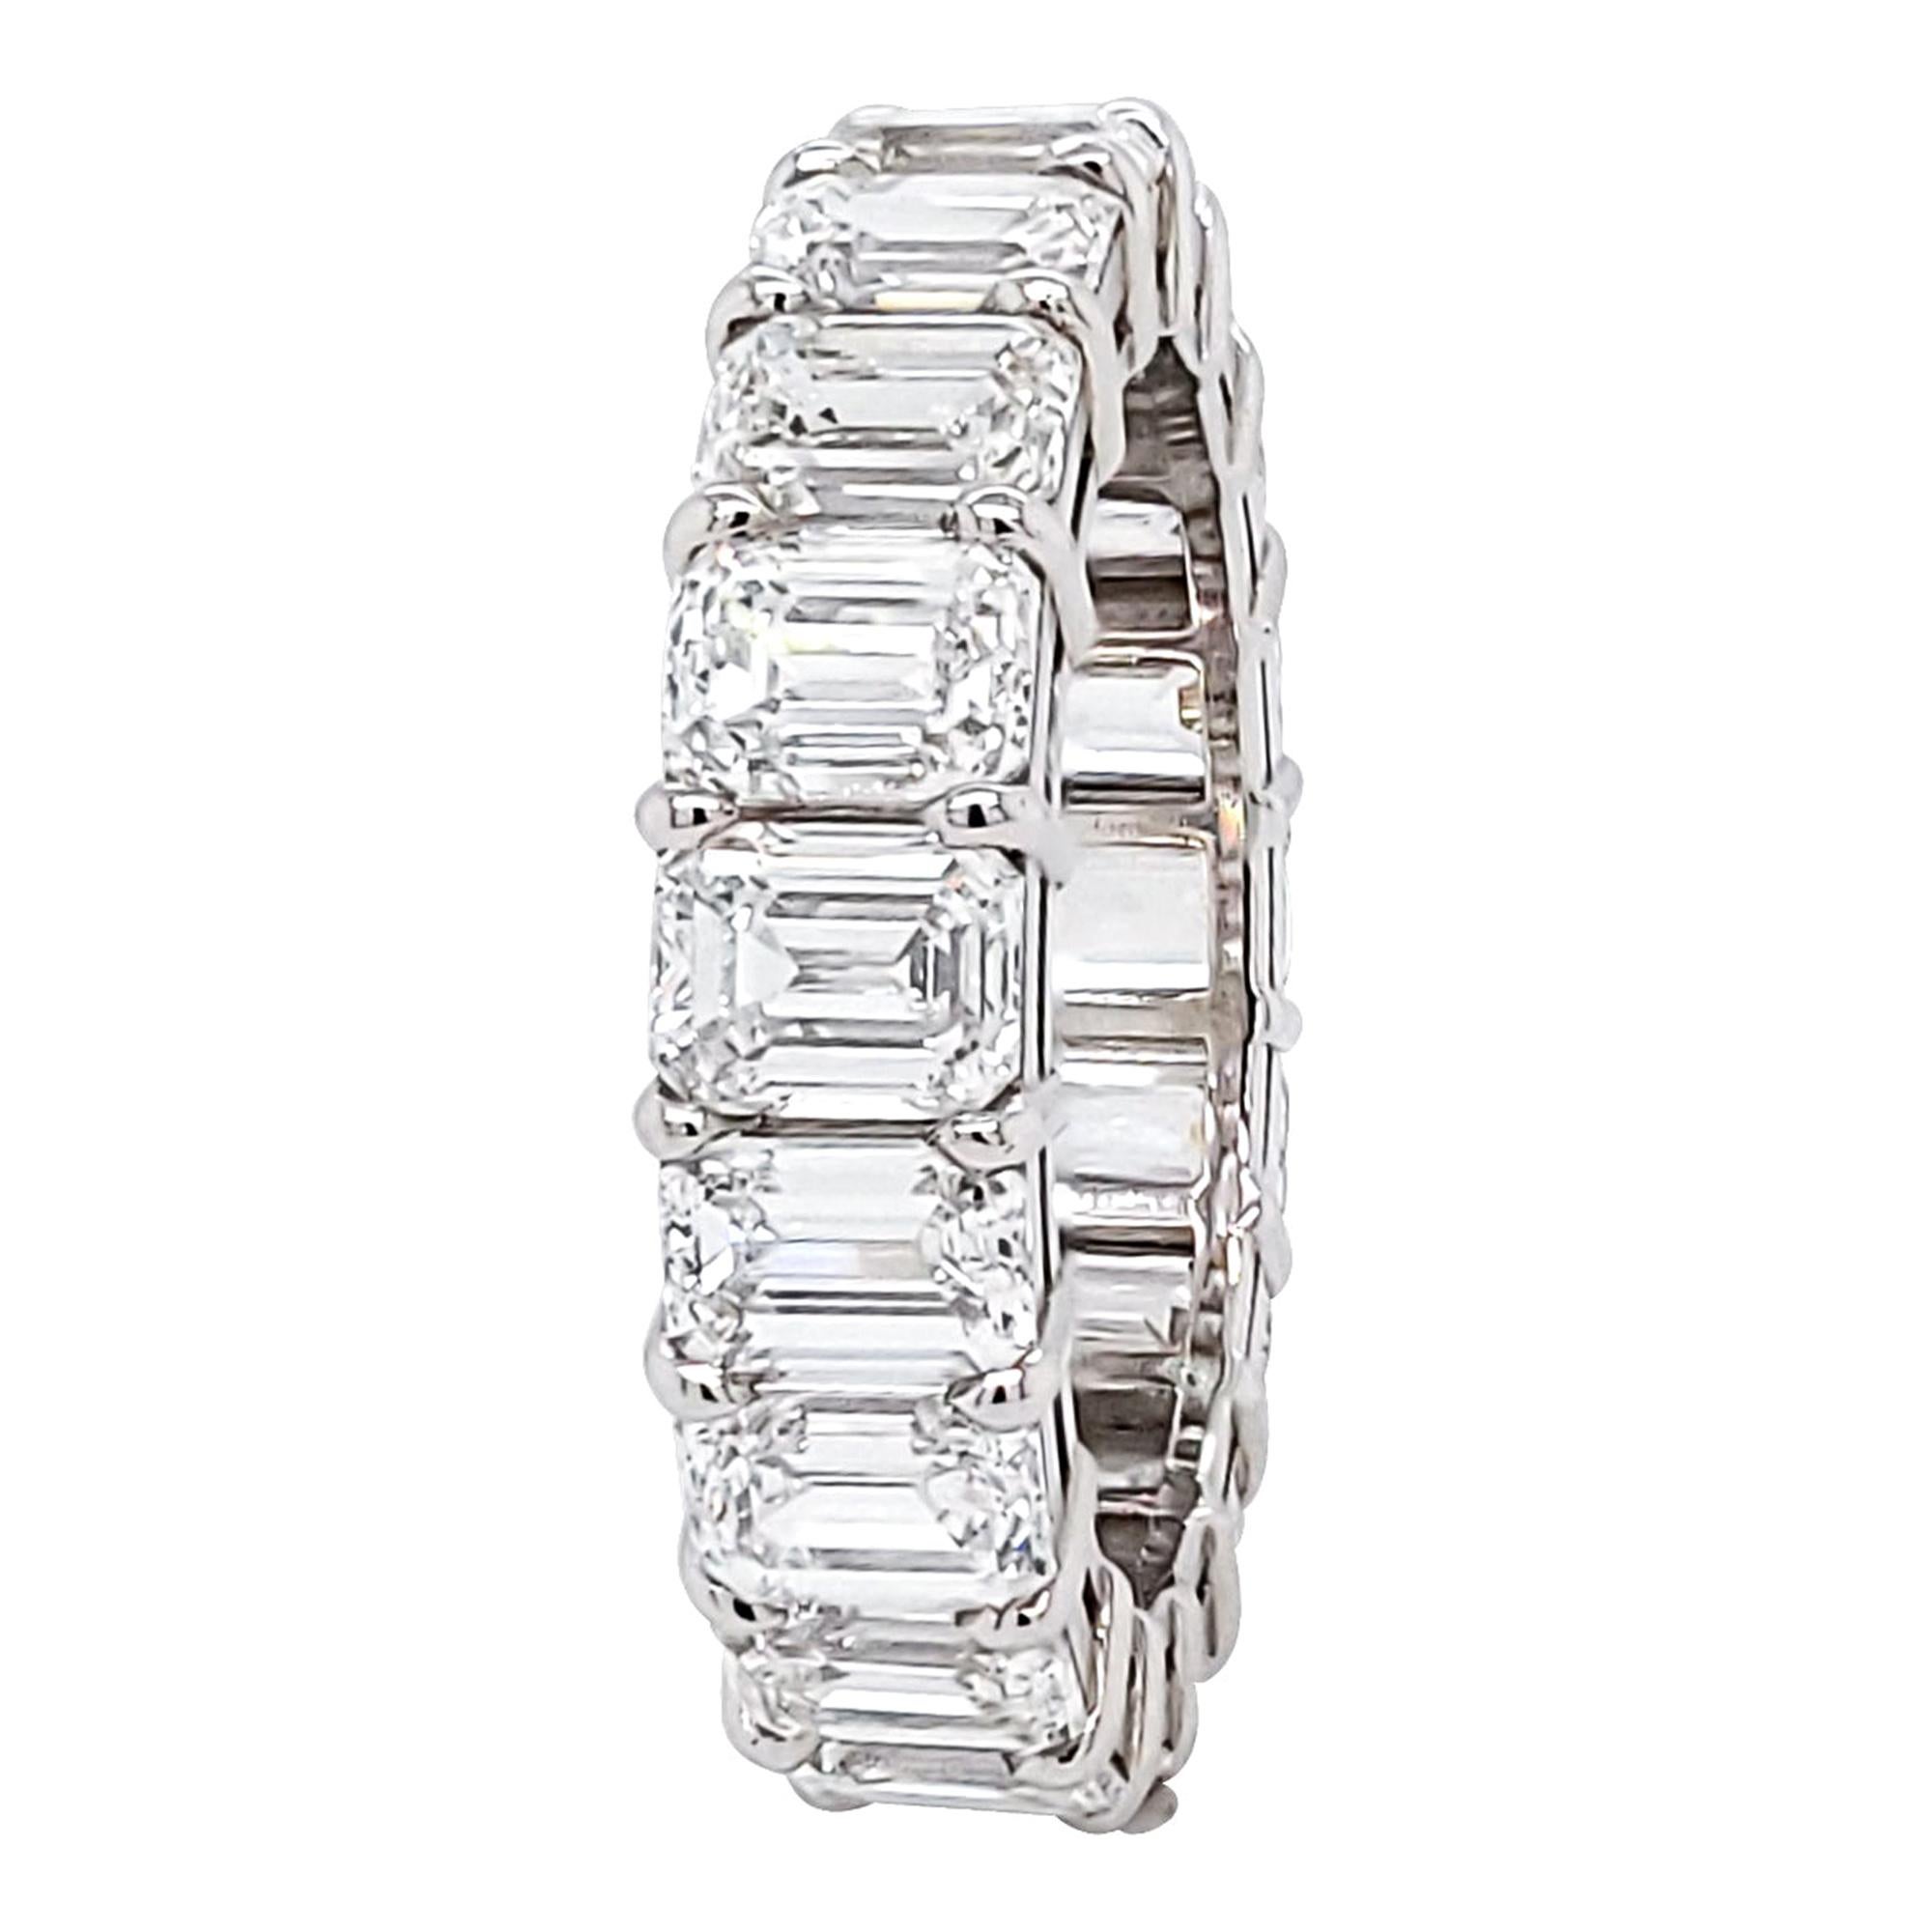 Spectra Fine Jewelry, 5.63 Carat Emerald Cut Diamond Wedding Ring